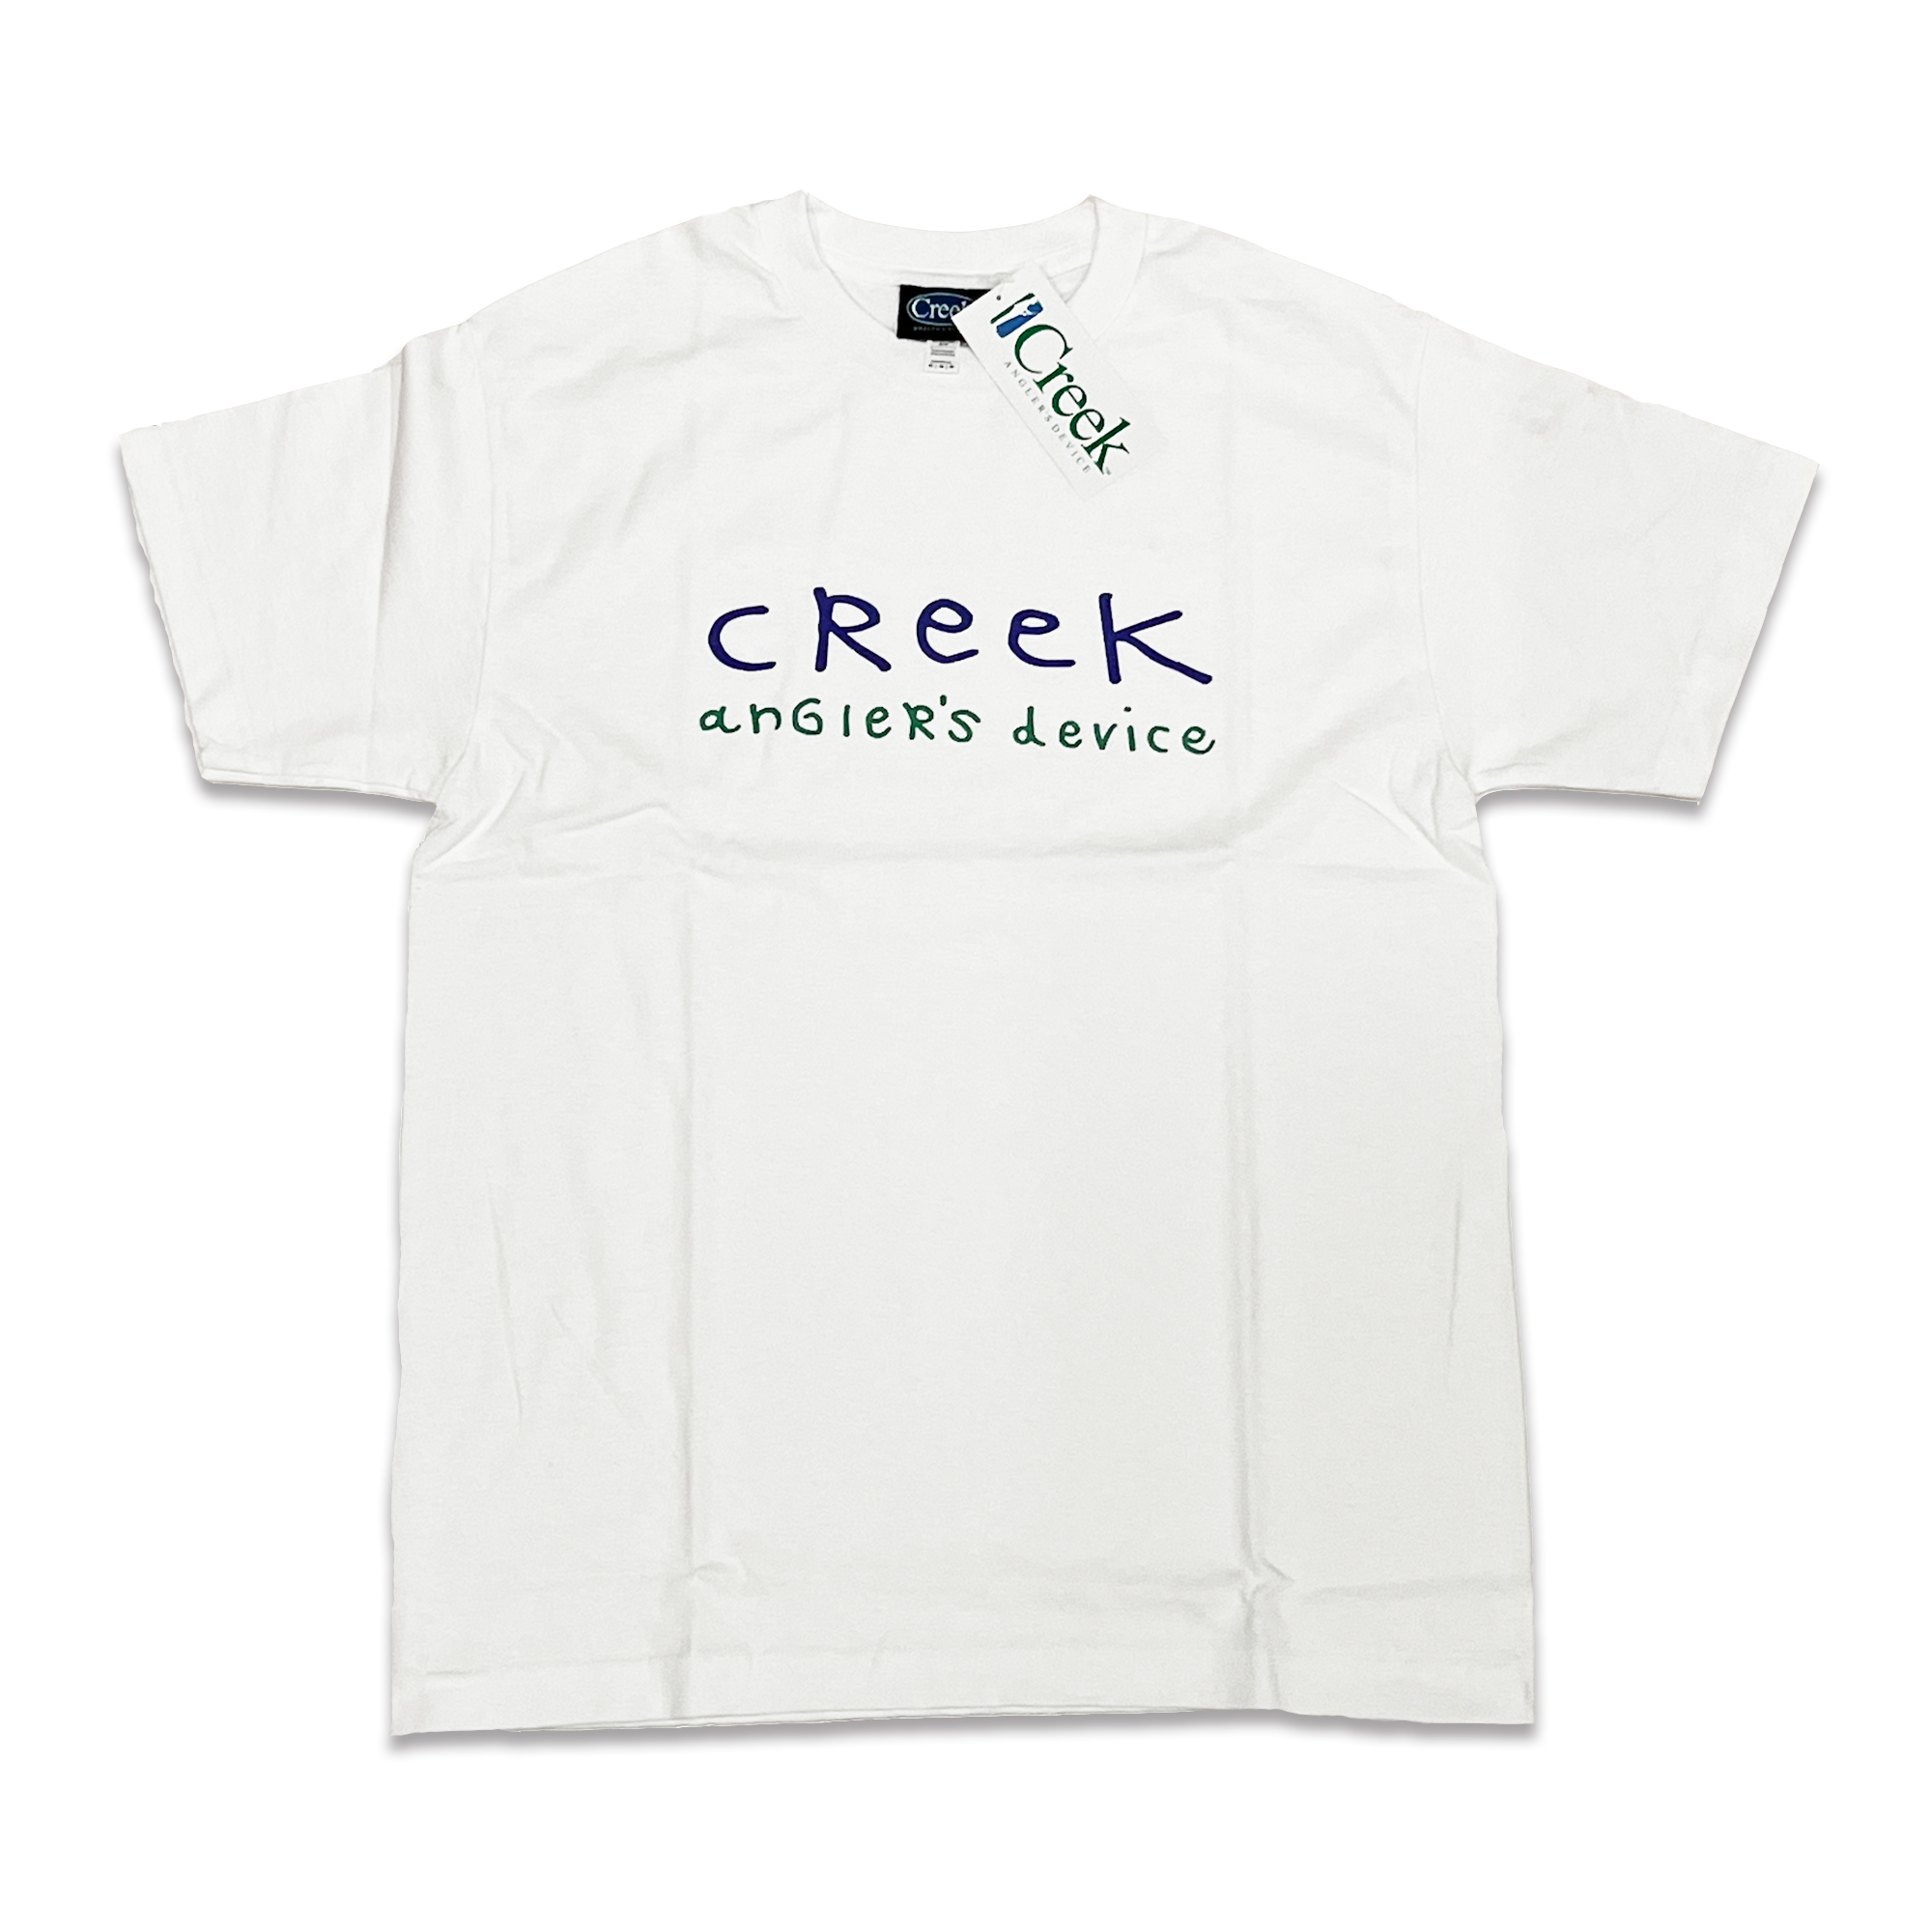 creek angler's device ロンT ネイビー - Tシャツ